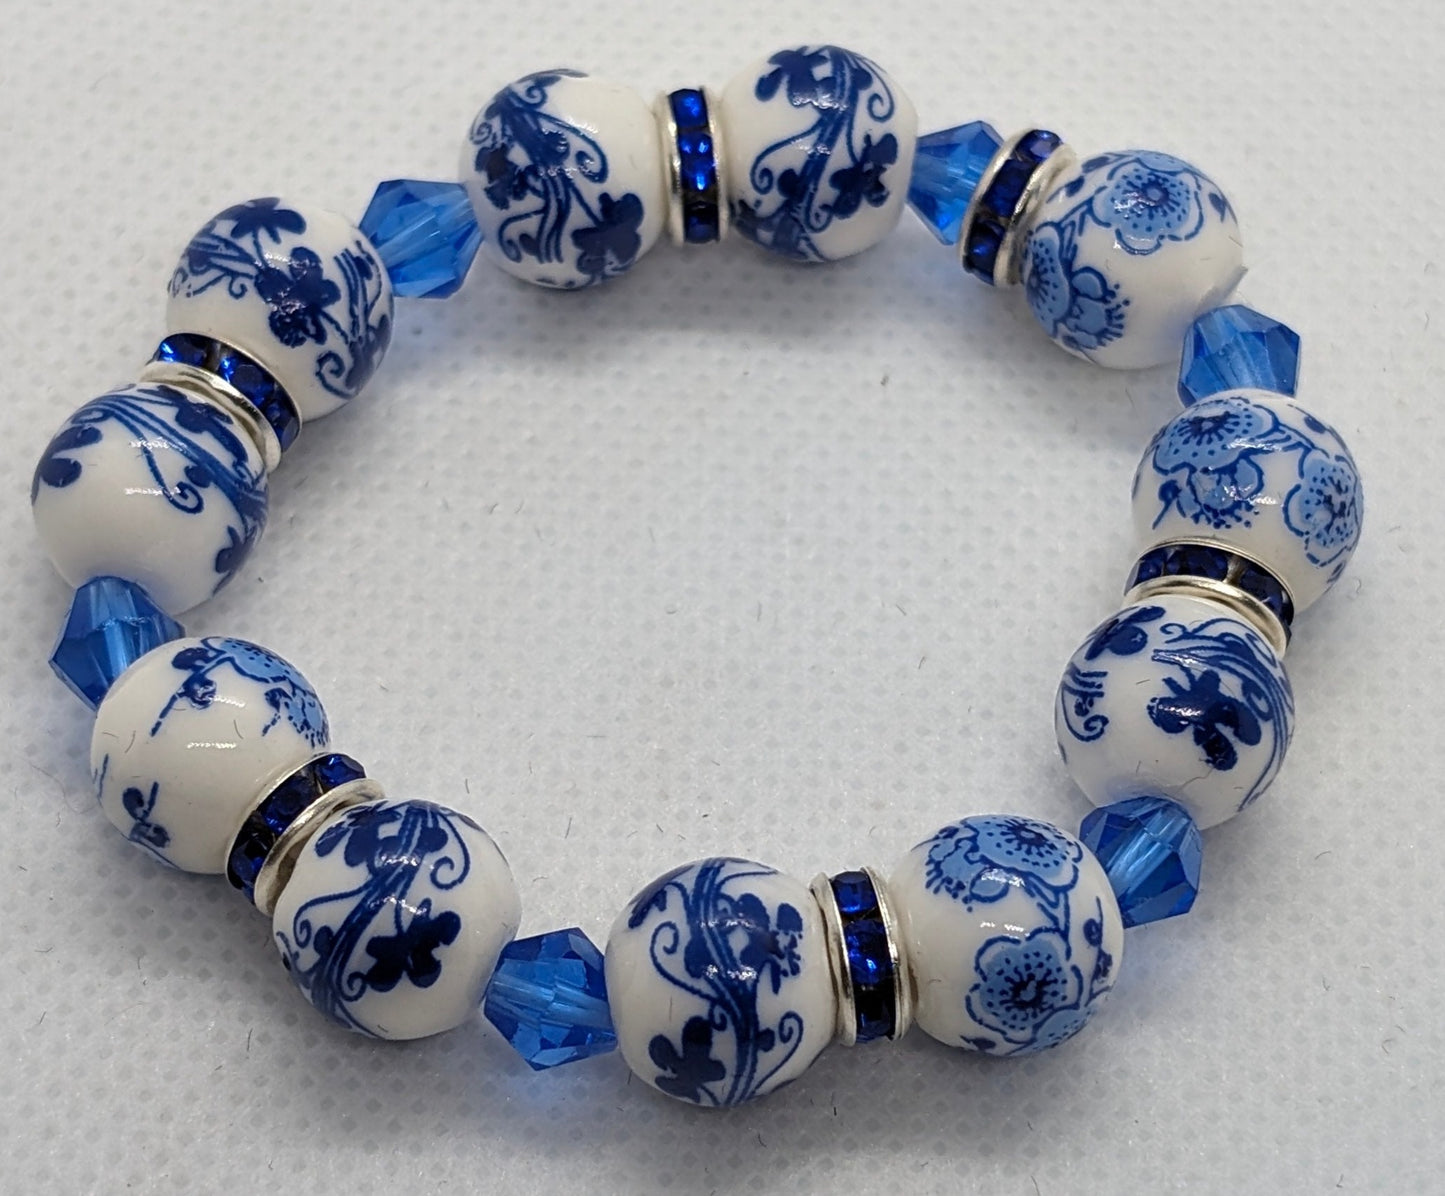 Beaded Elastic Bracelets-Blue